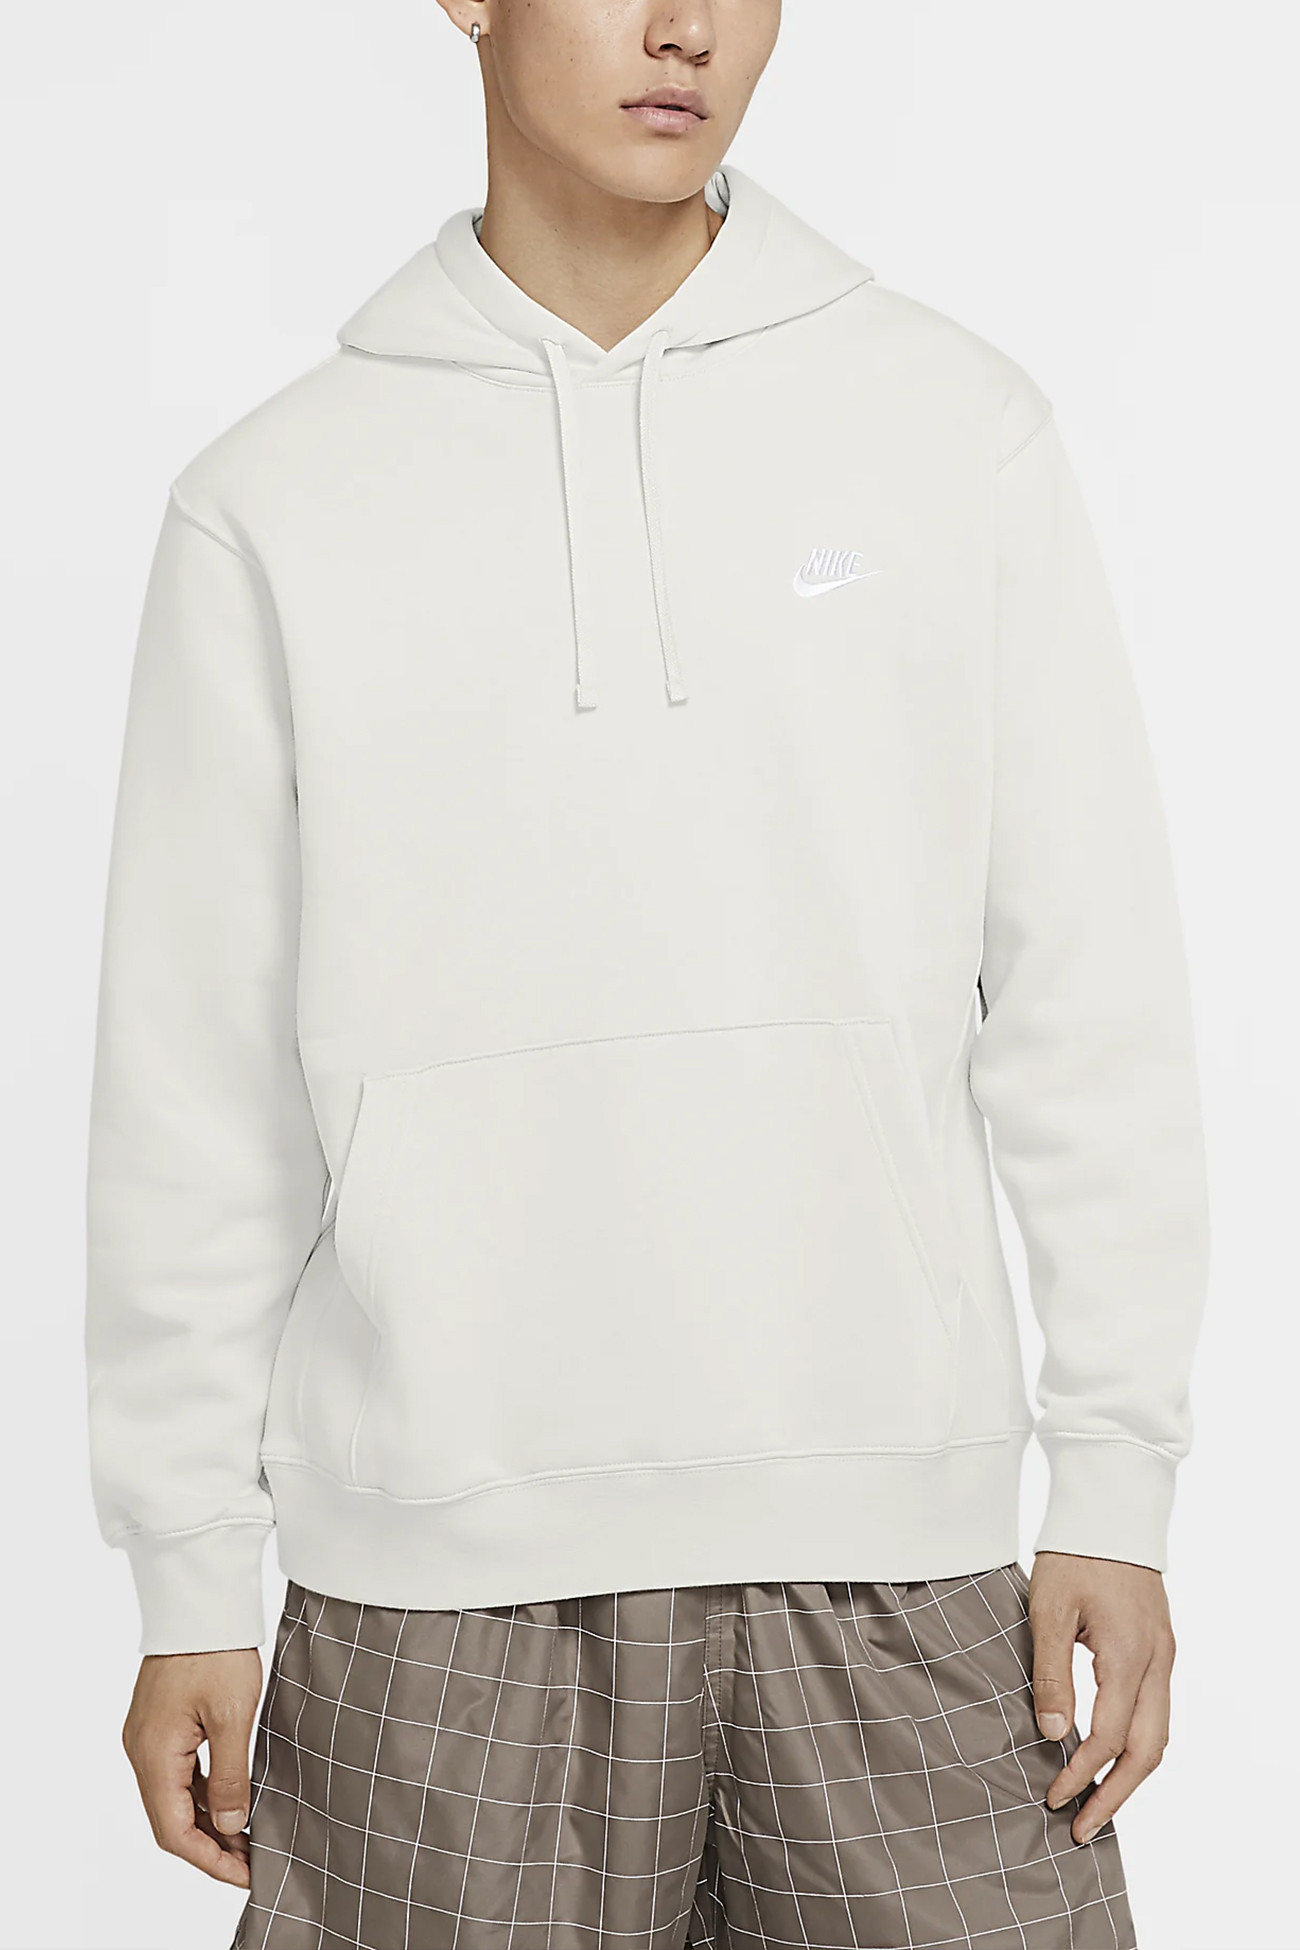 Толстовка мужская Nike Sportswear Club Fleece Pullover Hoodie белая BV2654-072 изображение 2